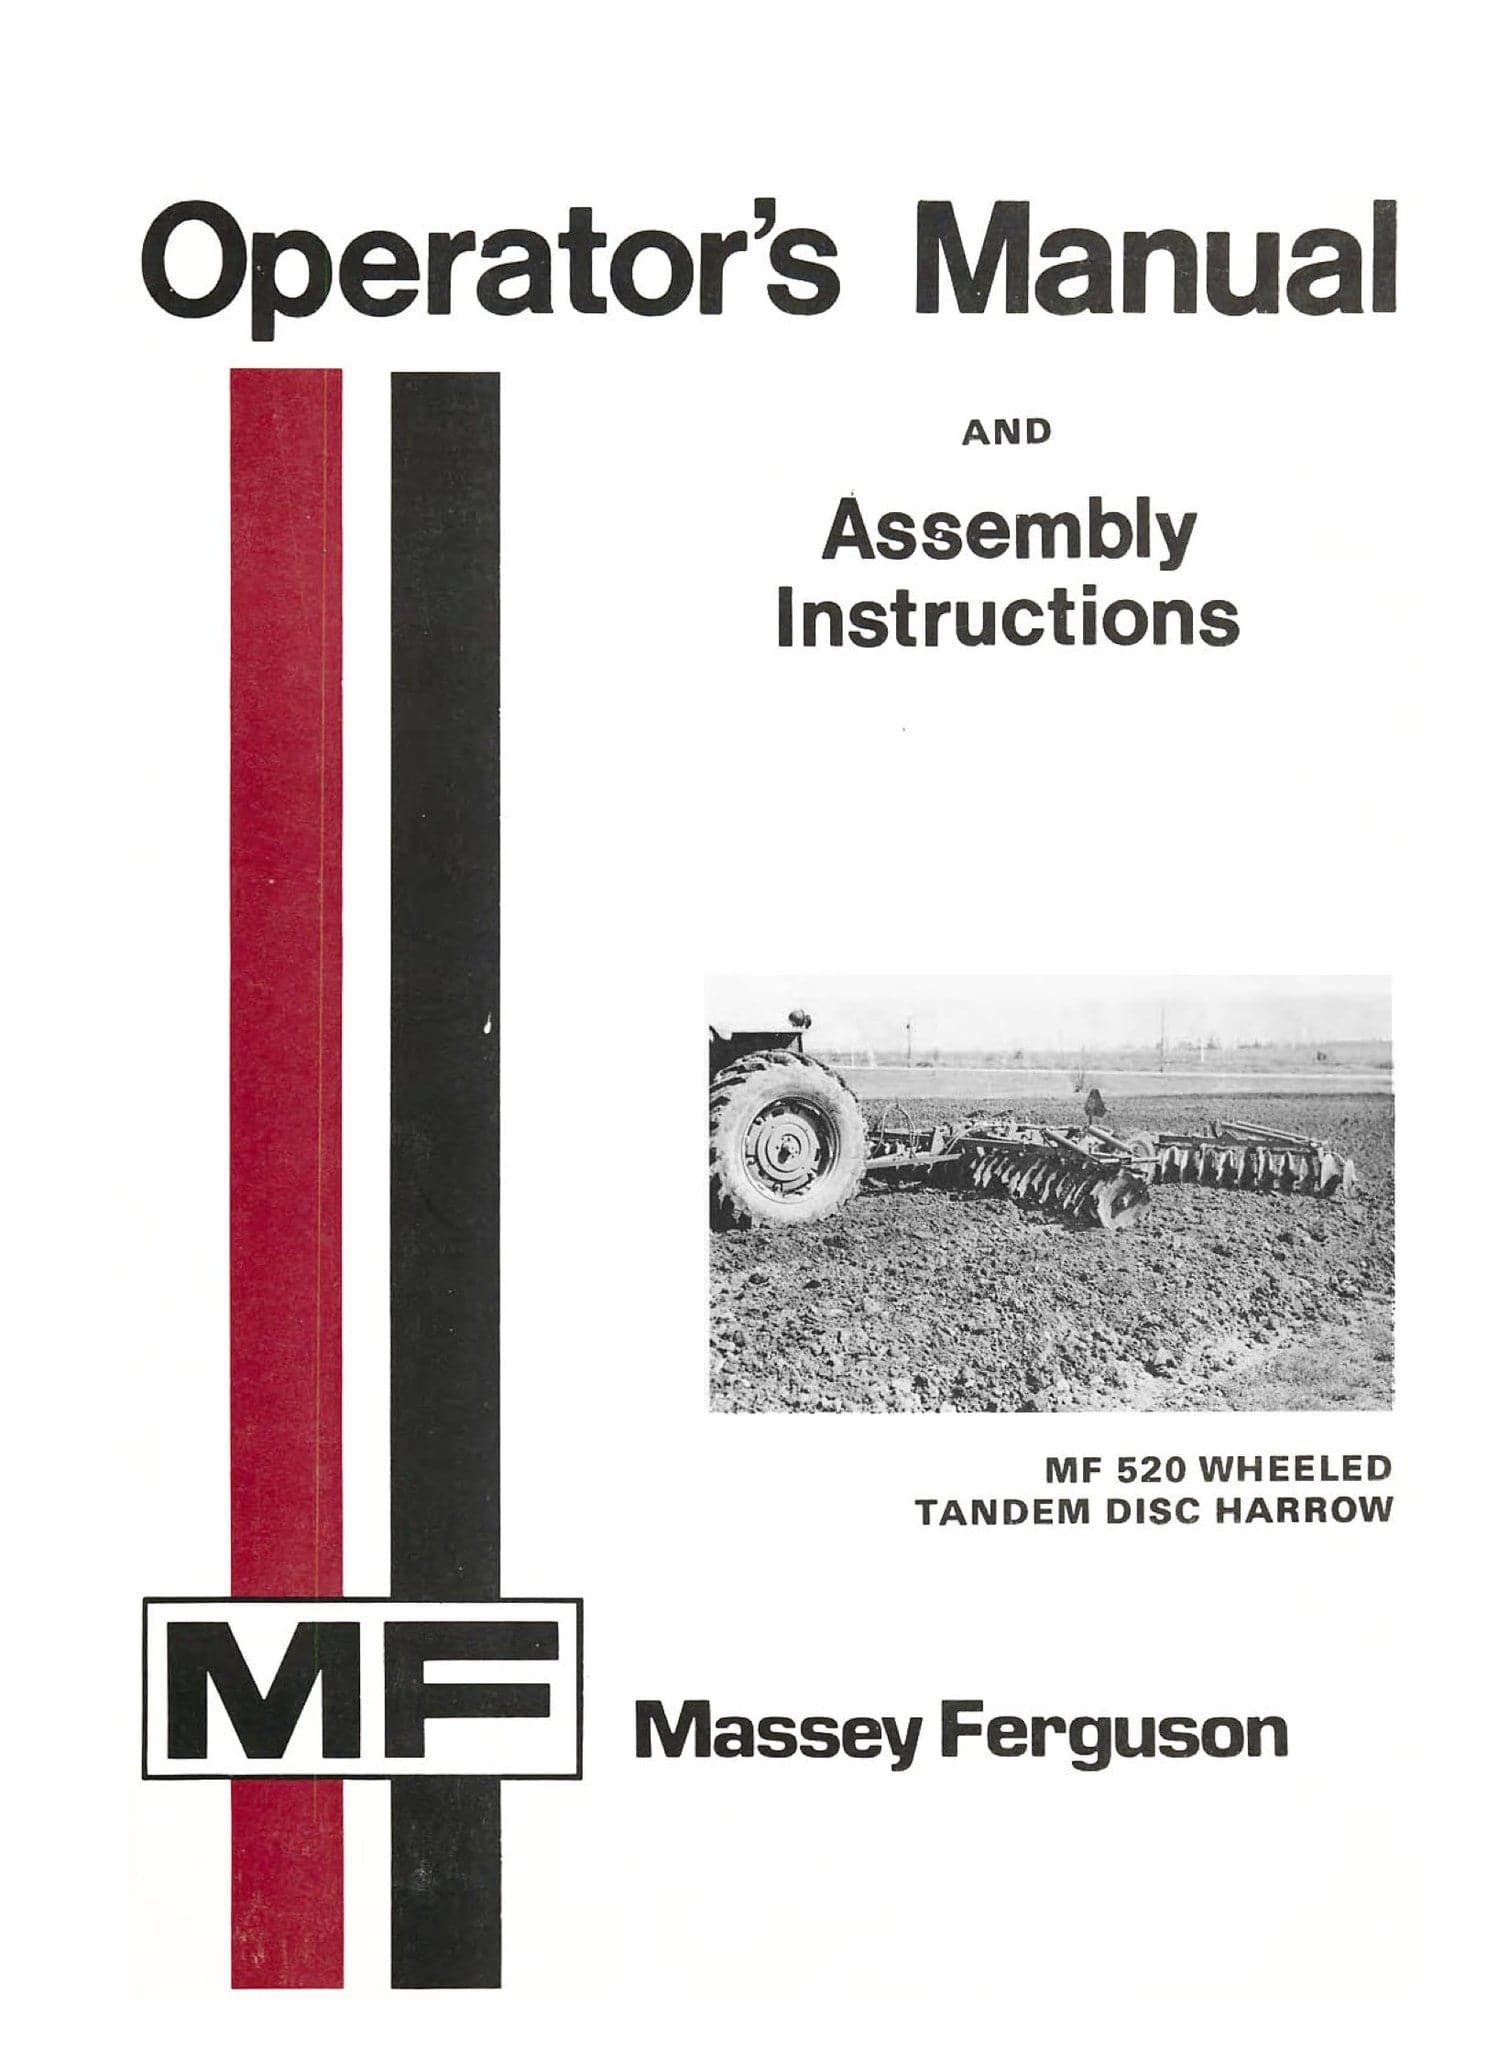 Massey Ferguson MF 520 Wheeled Tandem Disc Harrow - Operator's Manual and Assembly Instructions